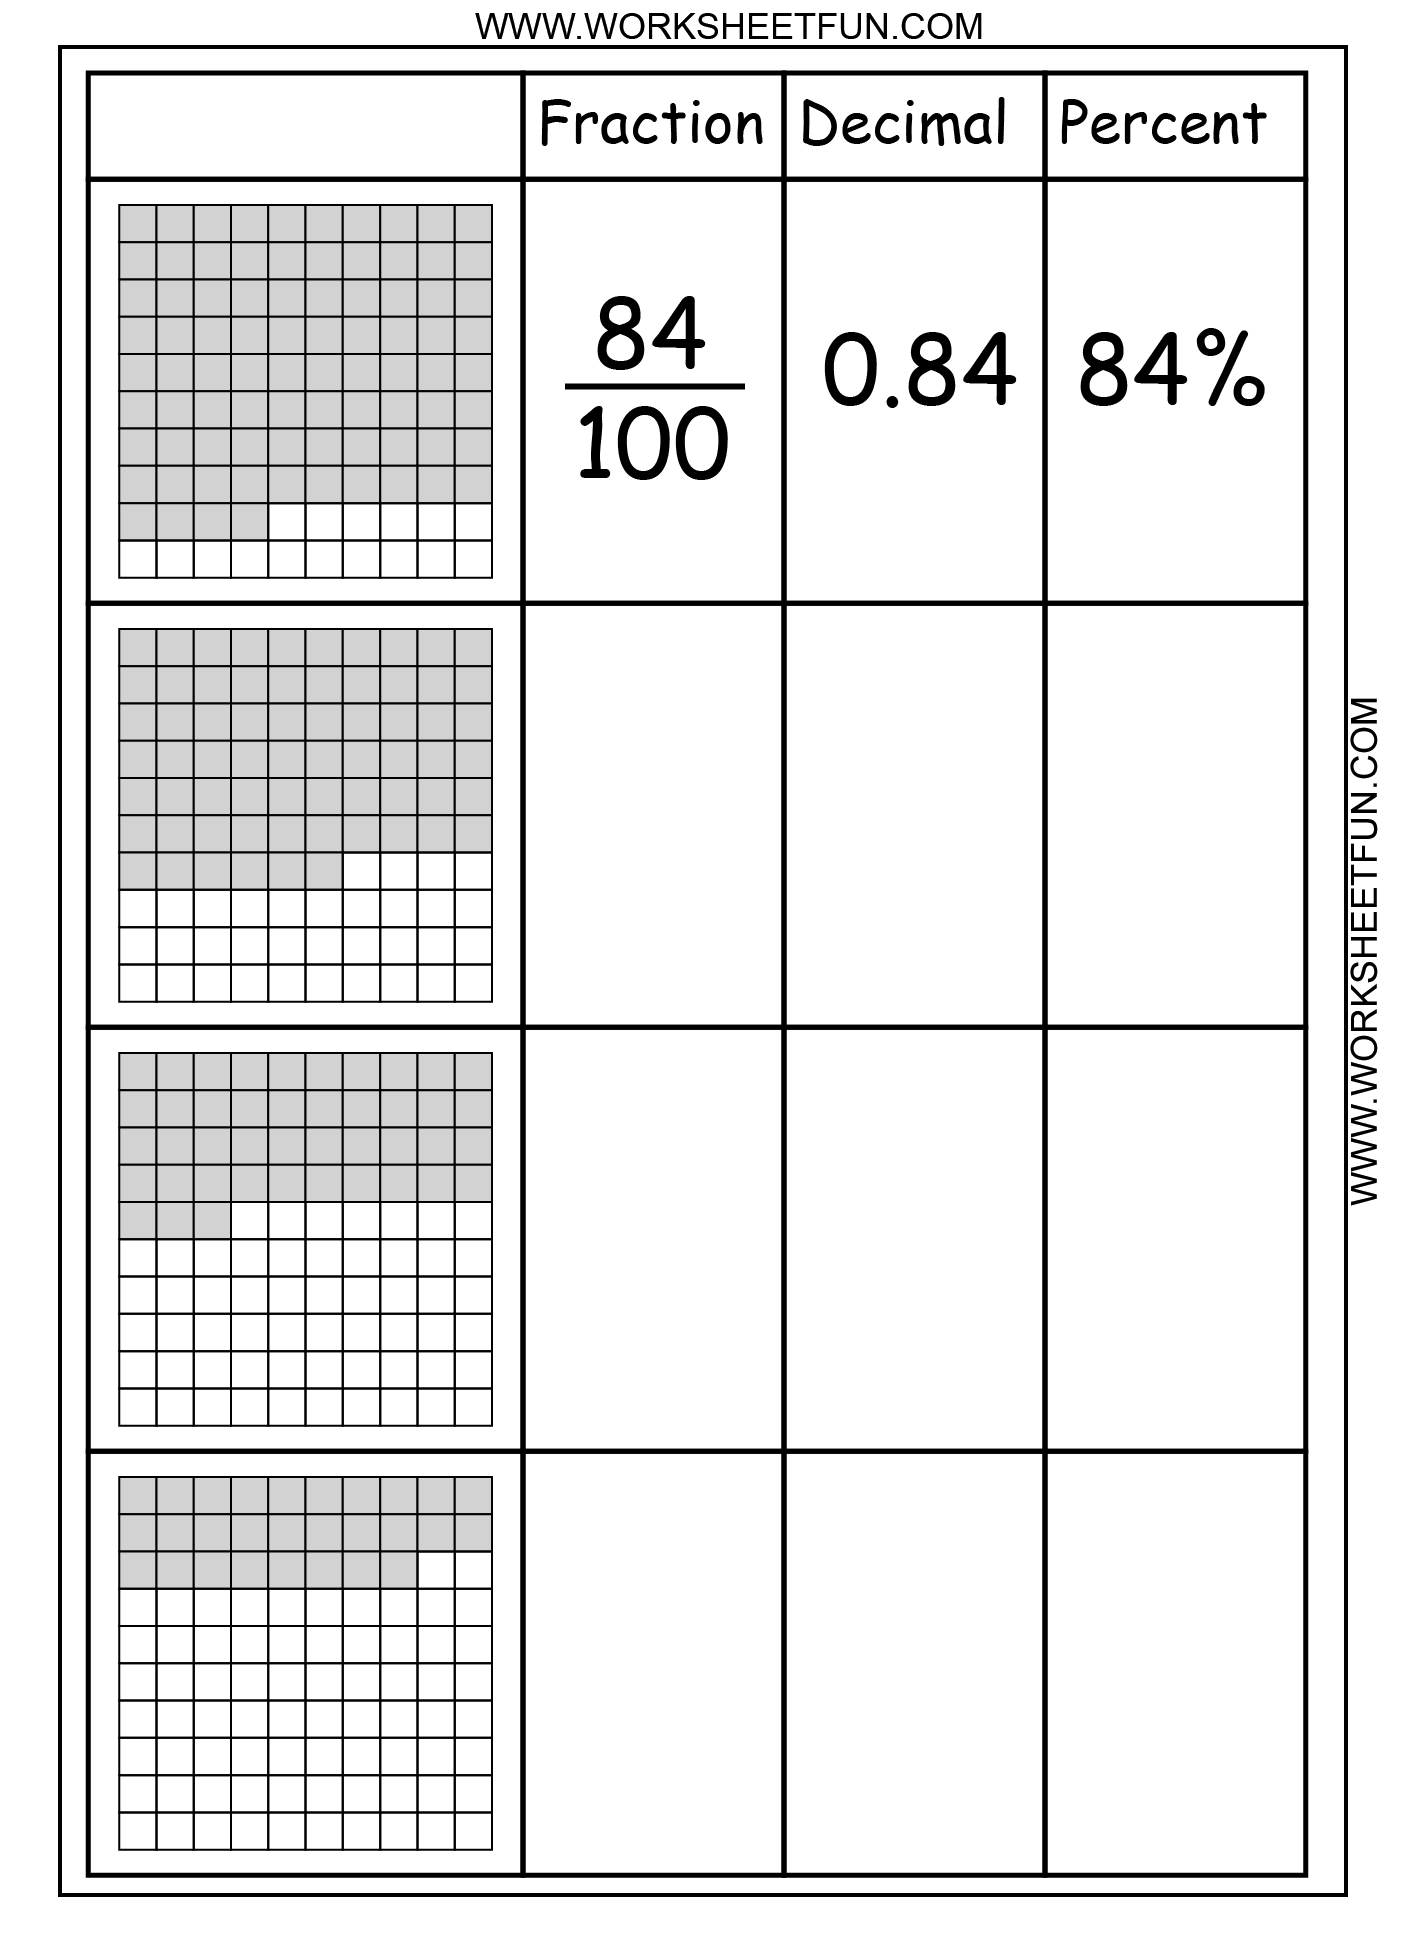 decimal-fraction-percents-visual-model-worksheet-decimal-worksheets